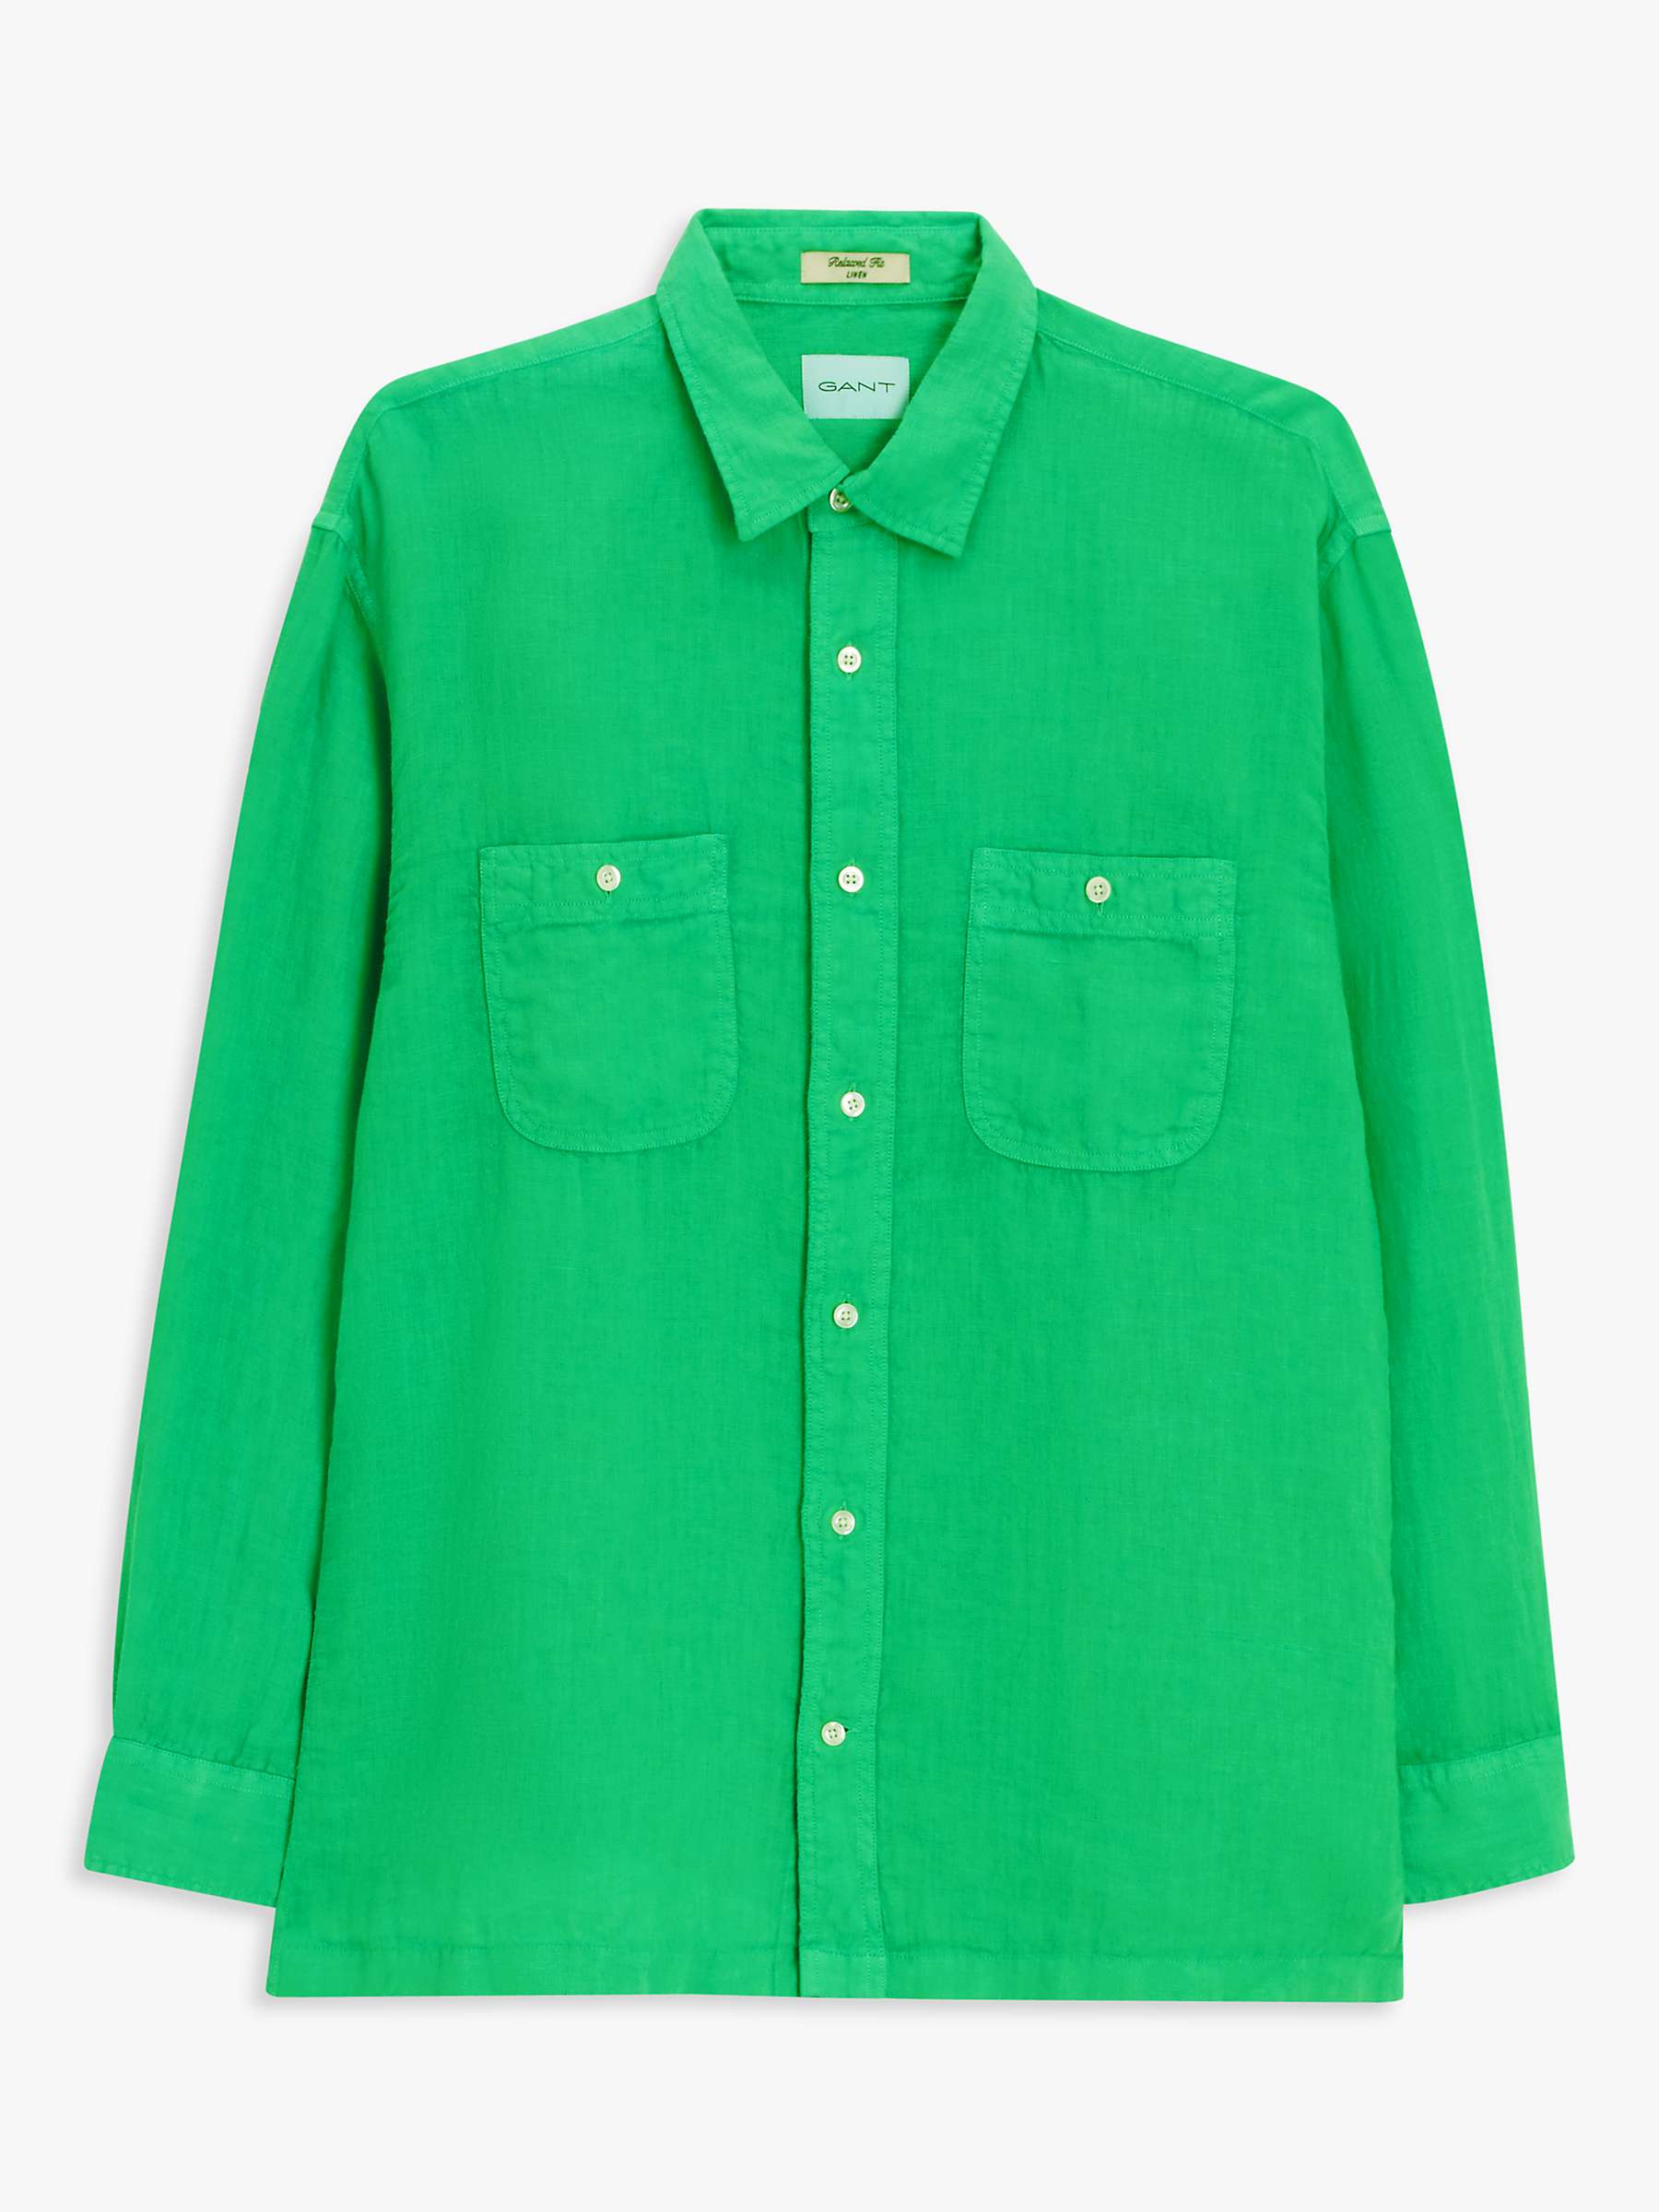 GANT Garment Dyed Linen Shirt, Mid Green at John Lewis & Partners